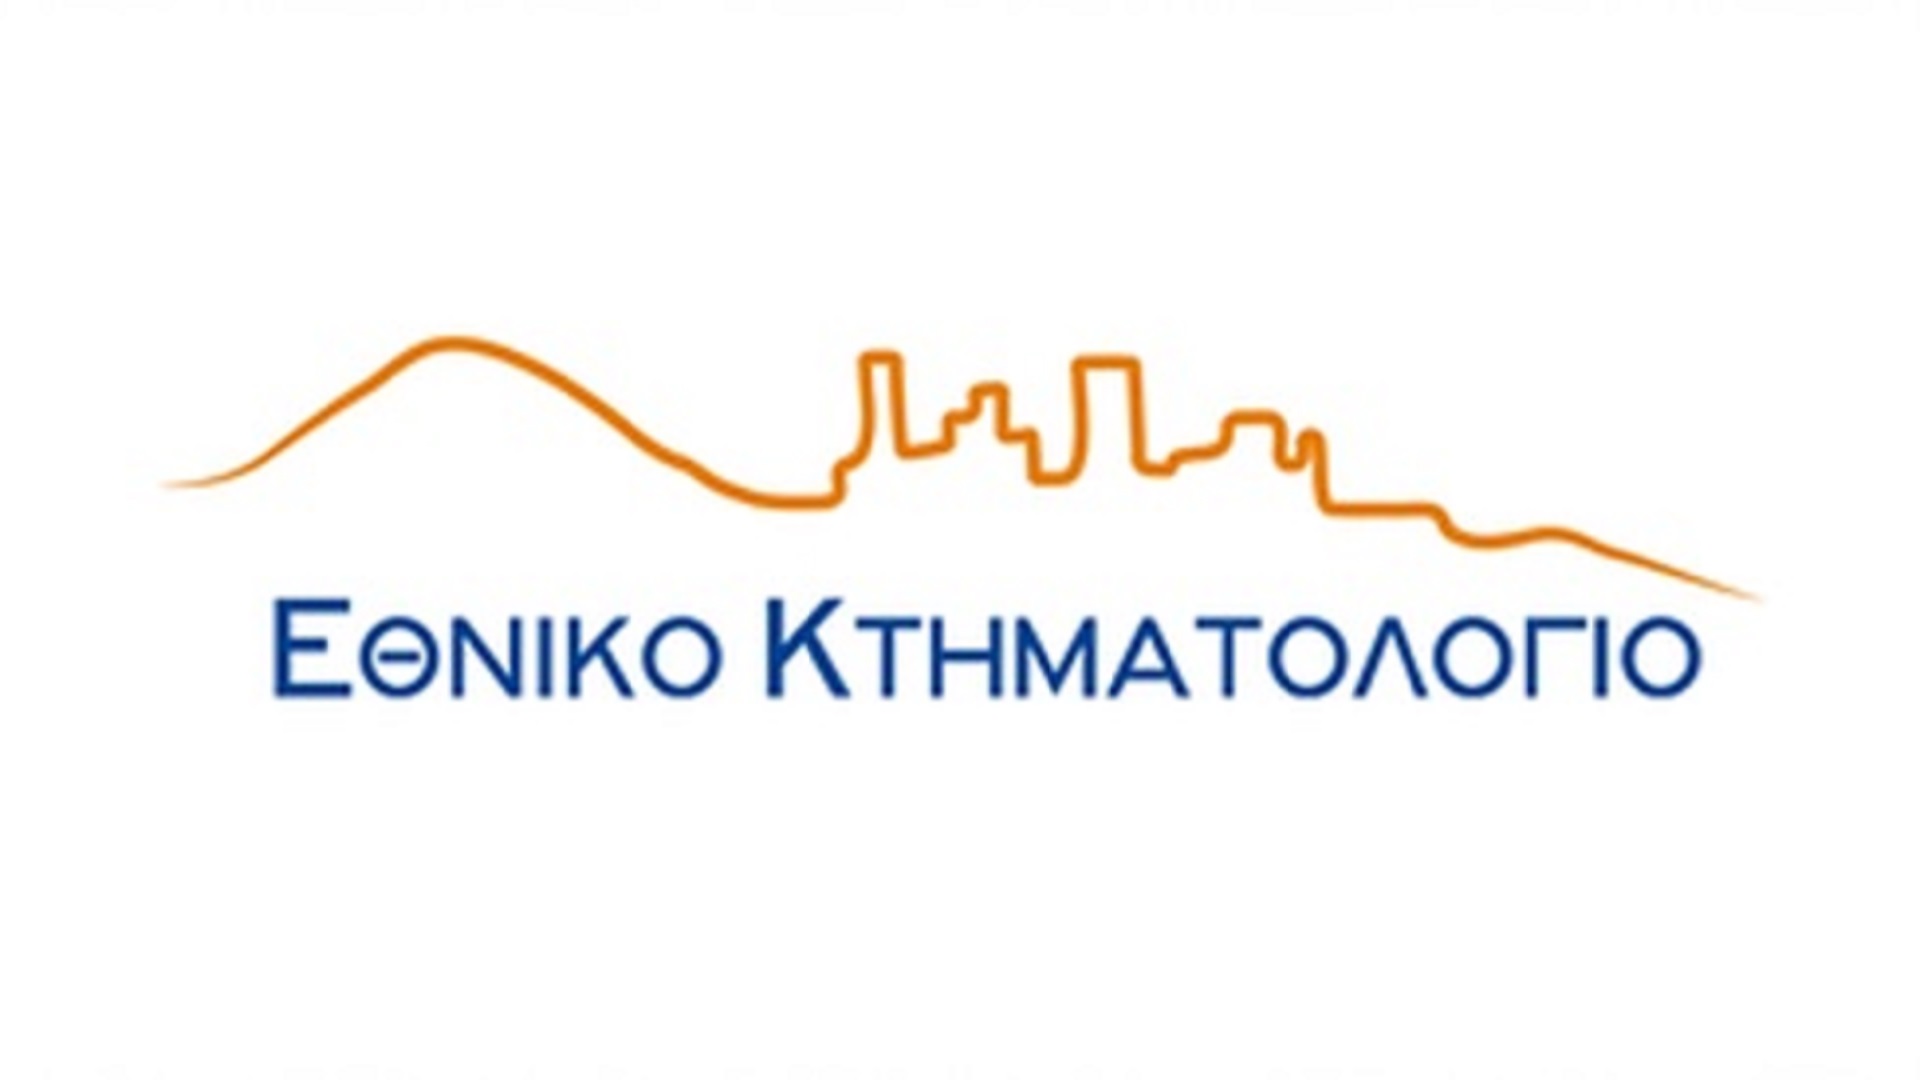 More information about "Η Γεωπύλη INSPIRE του Ελληνικού Κτηματολογίου συμπλήρωσε δύο χρόνια λειτουργίας"